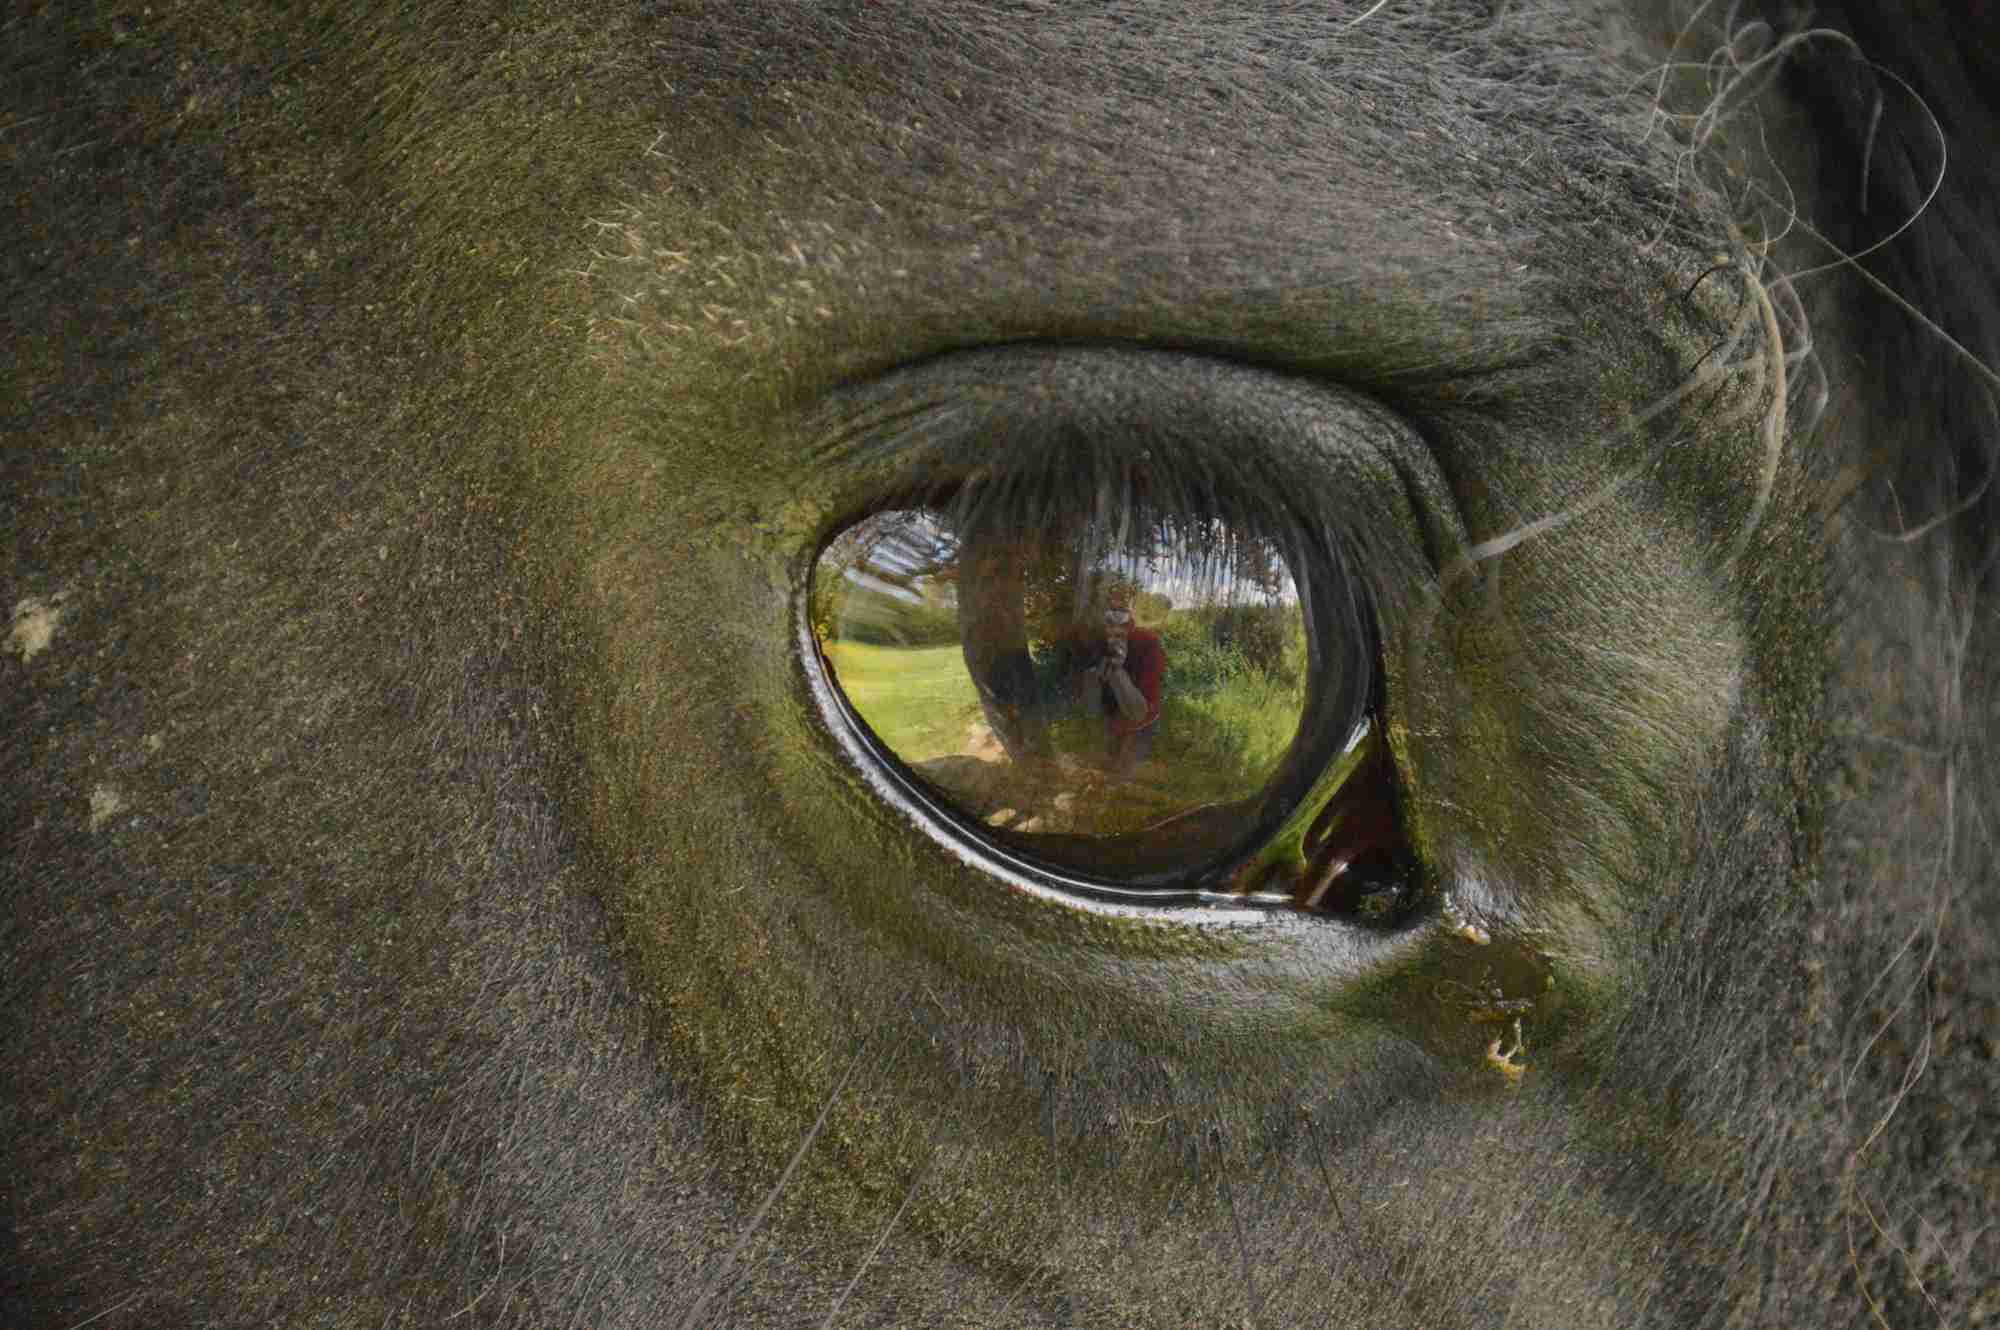 Horse eye with tear drop